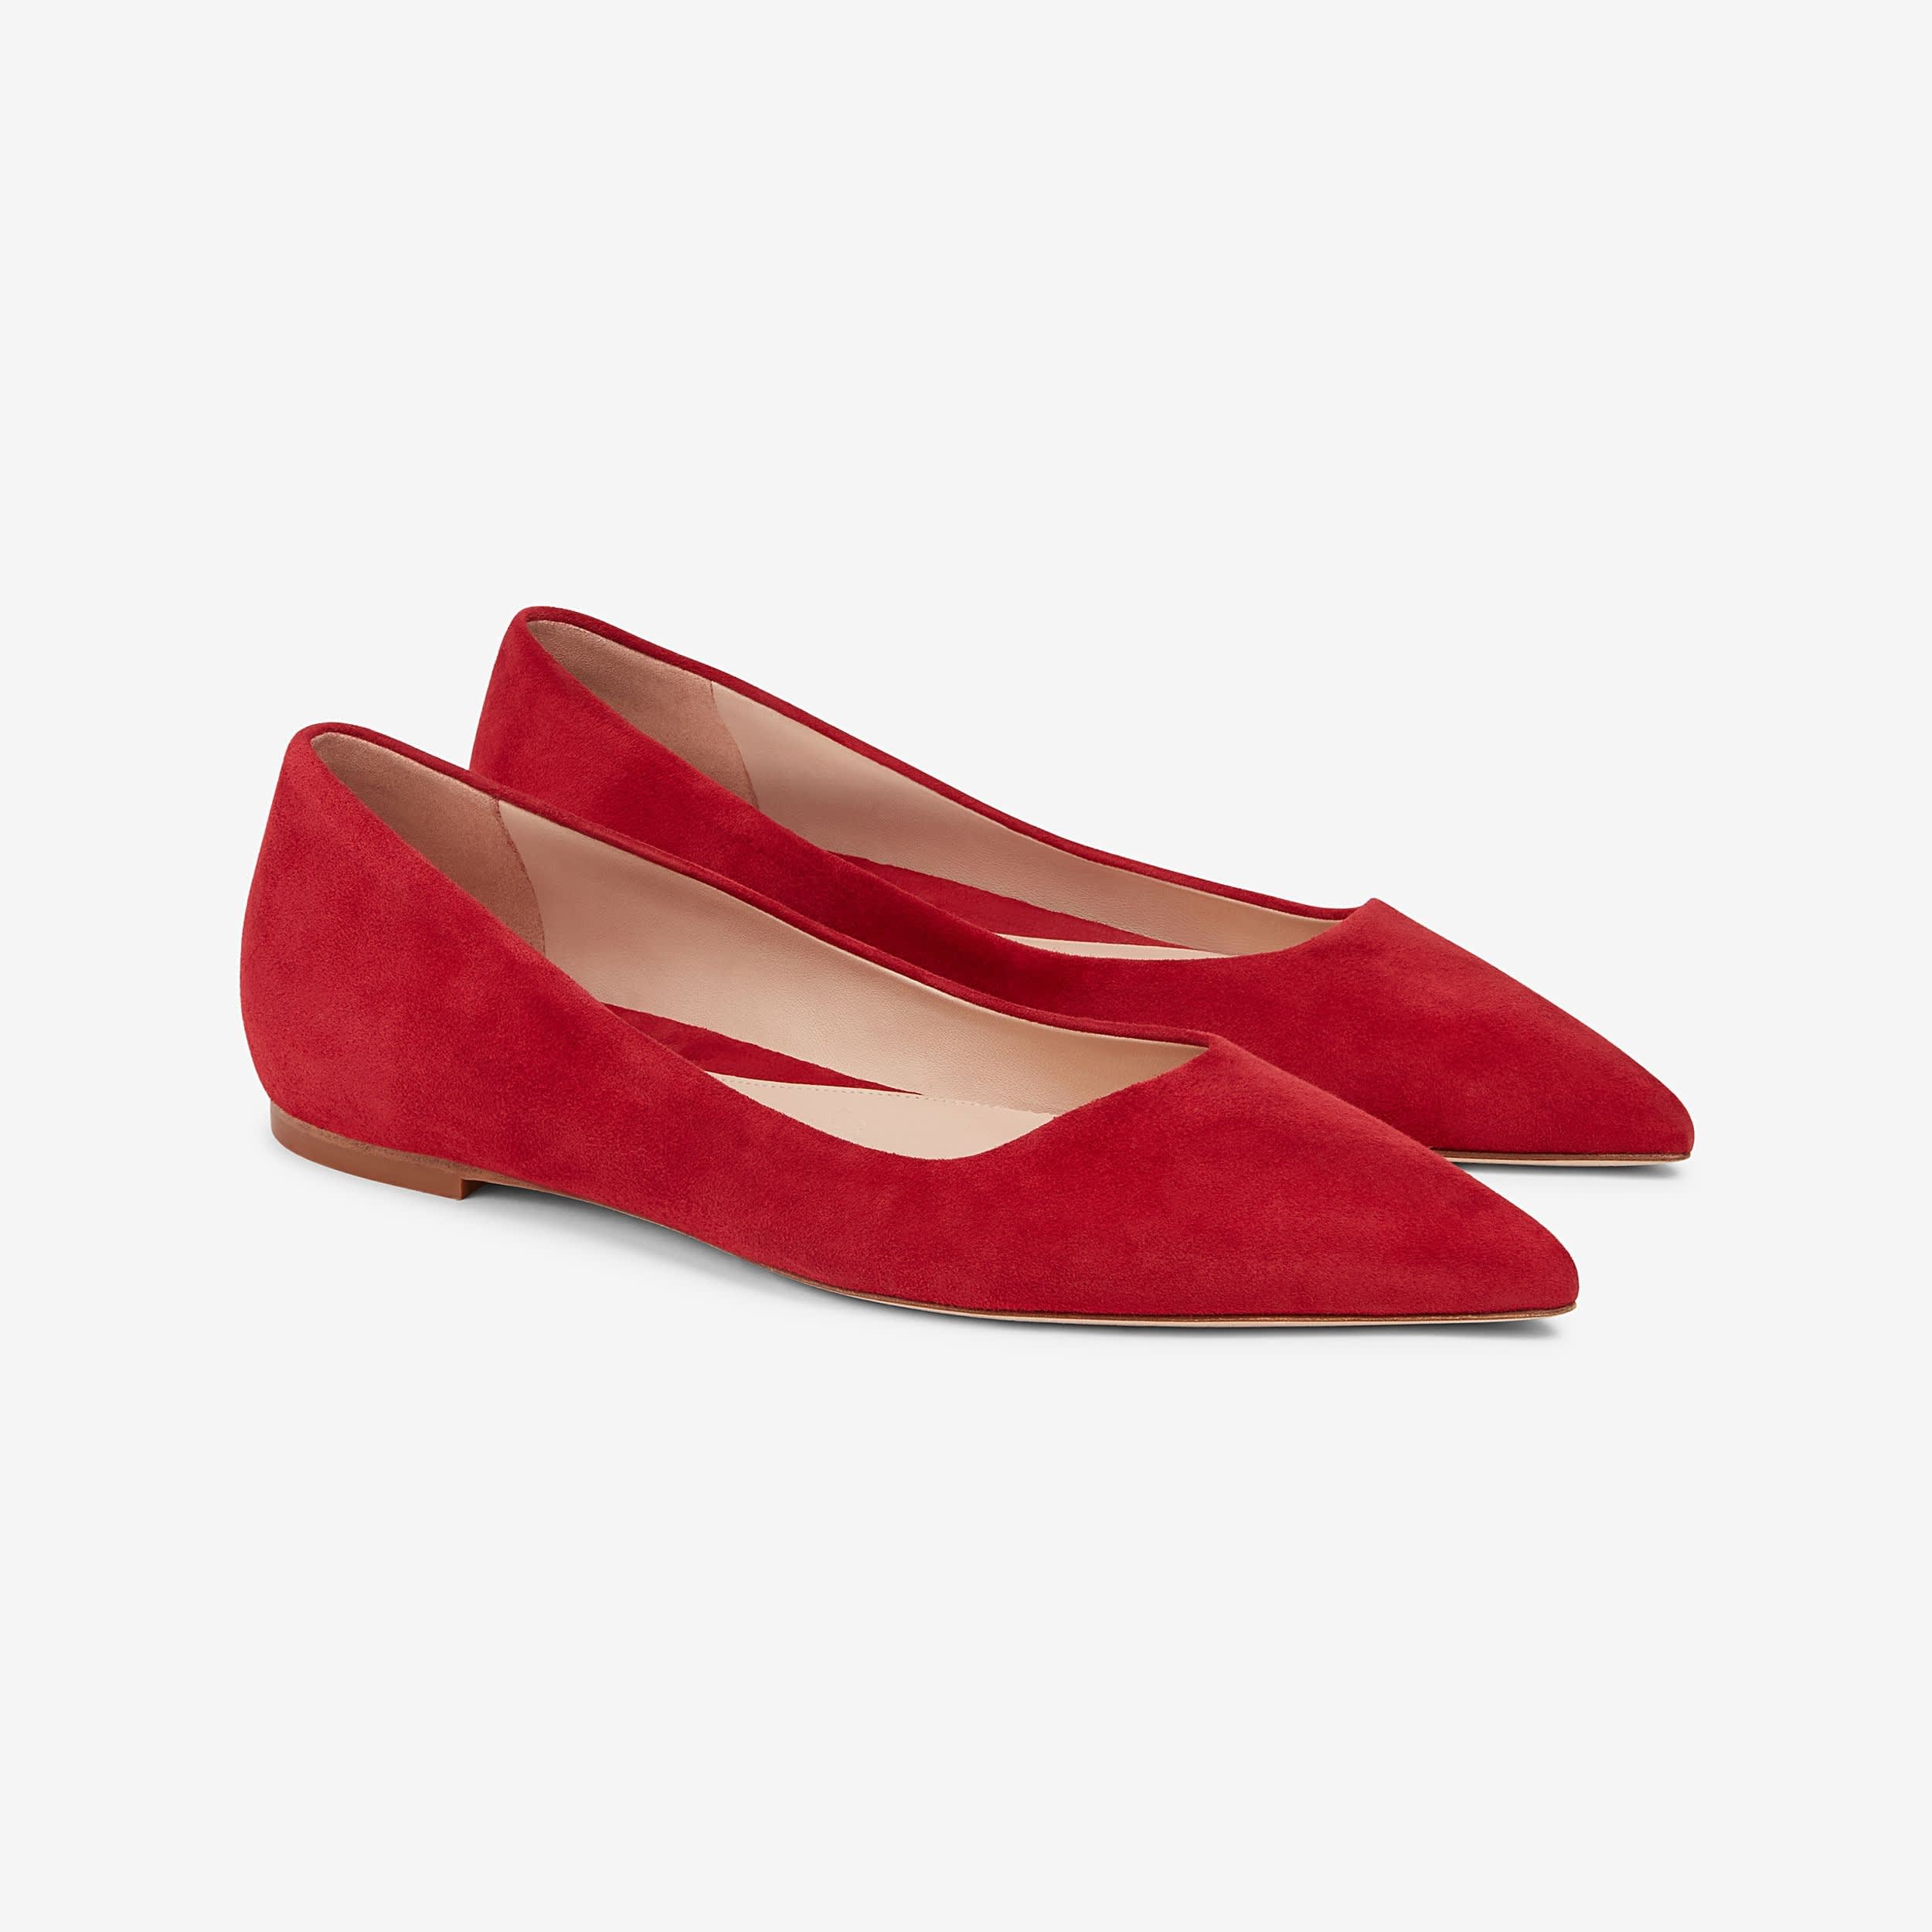 Nicholas Kirkwood Womens Red Leather Pumps Heel 4.5” Size 38.5